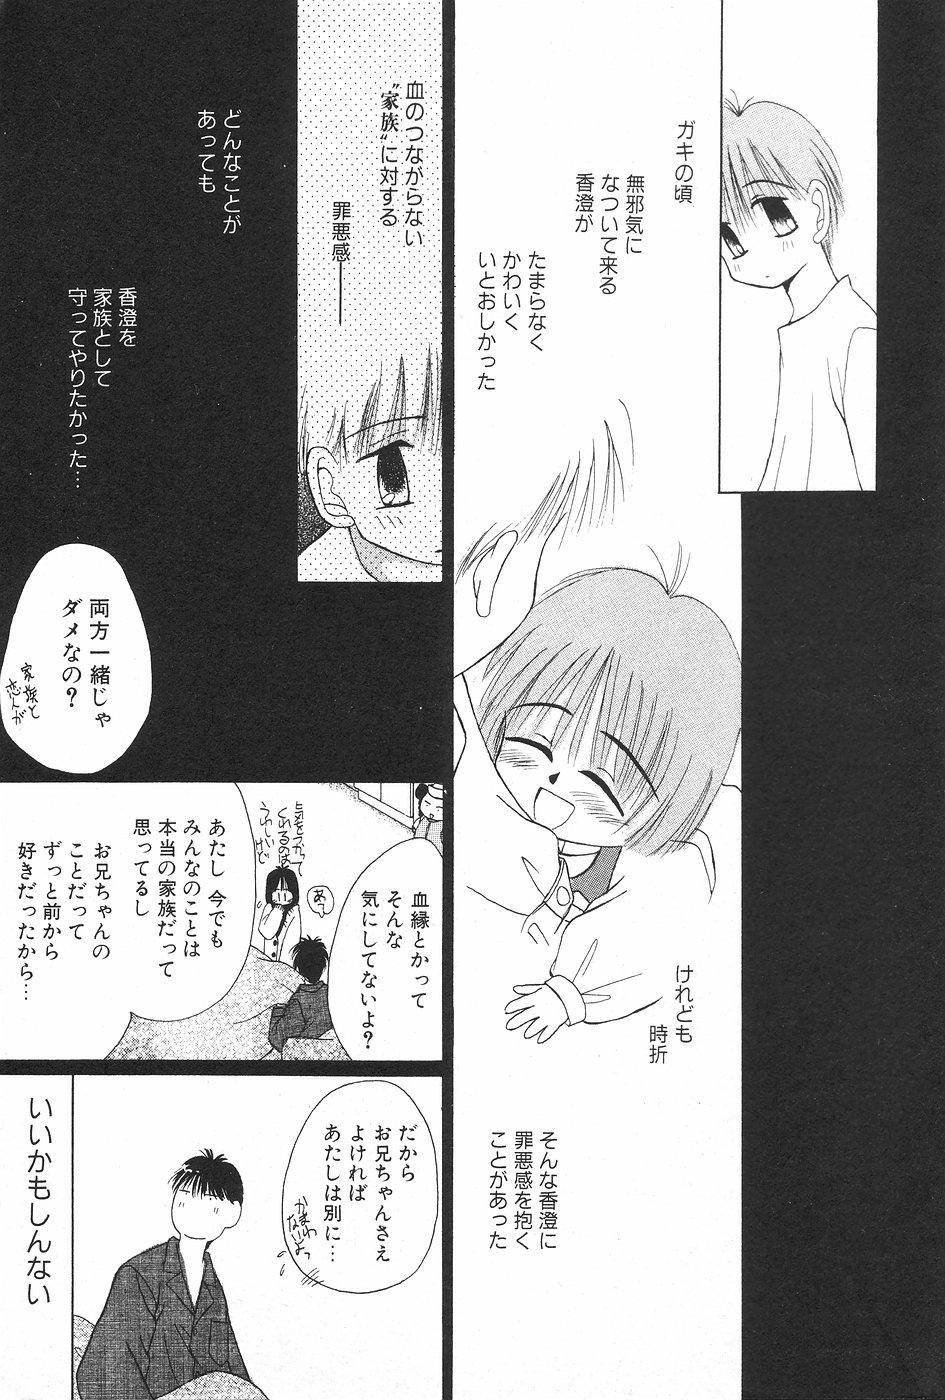 Manga Hotmilk 1997-05 36